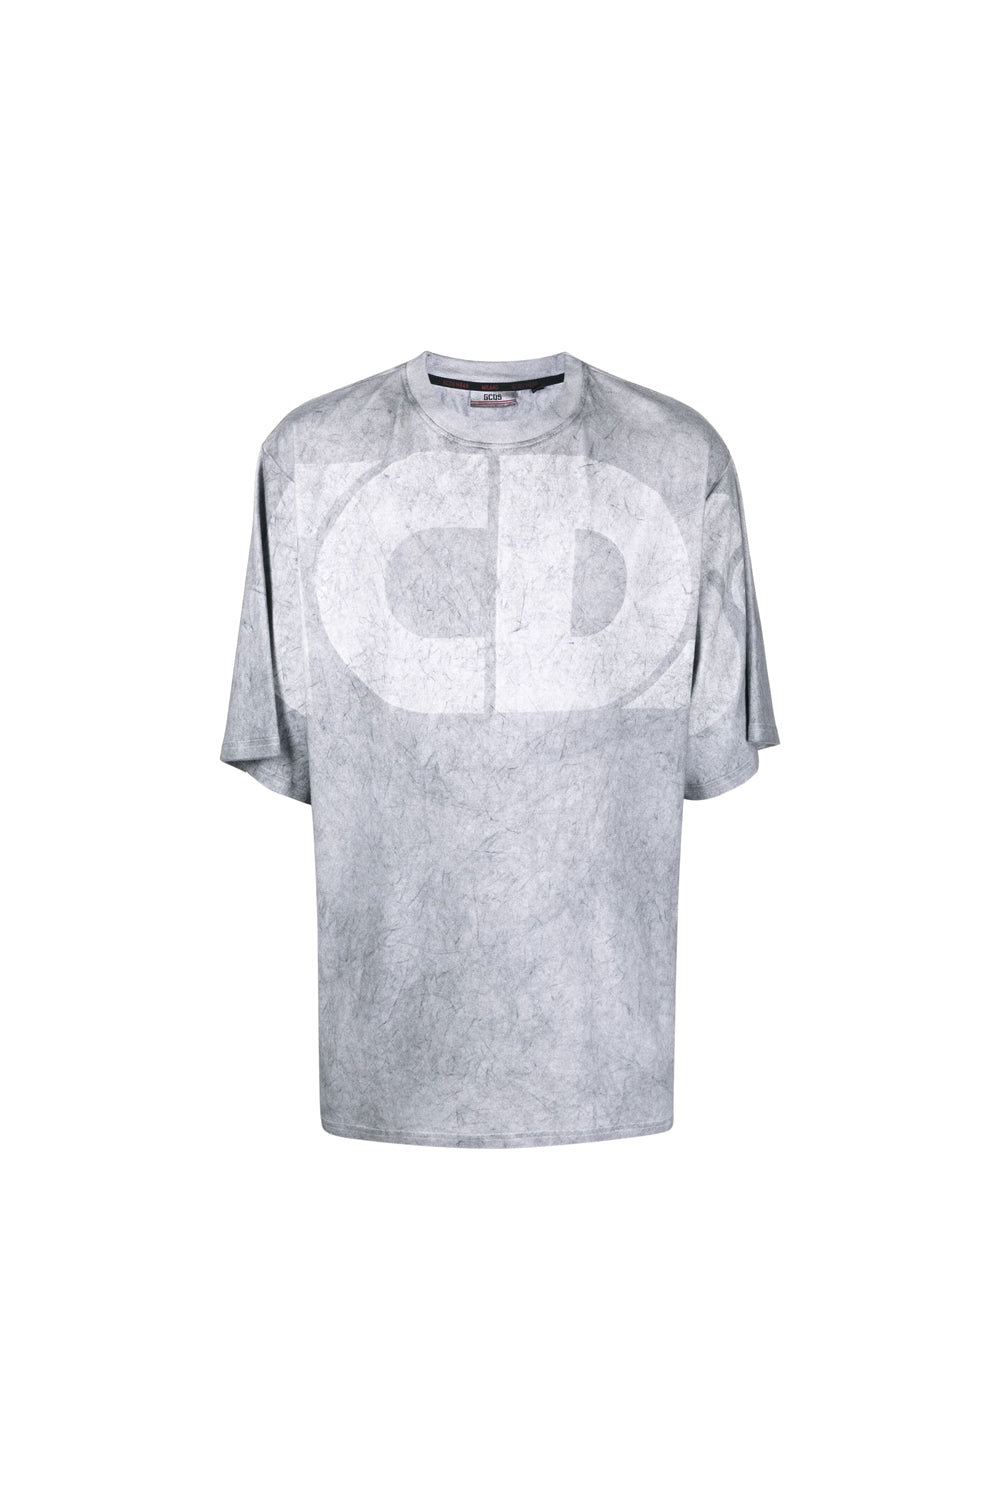 Gcds distressed effect logo print cotton T-shirt